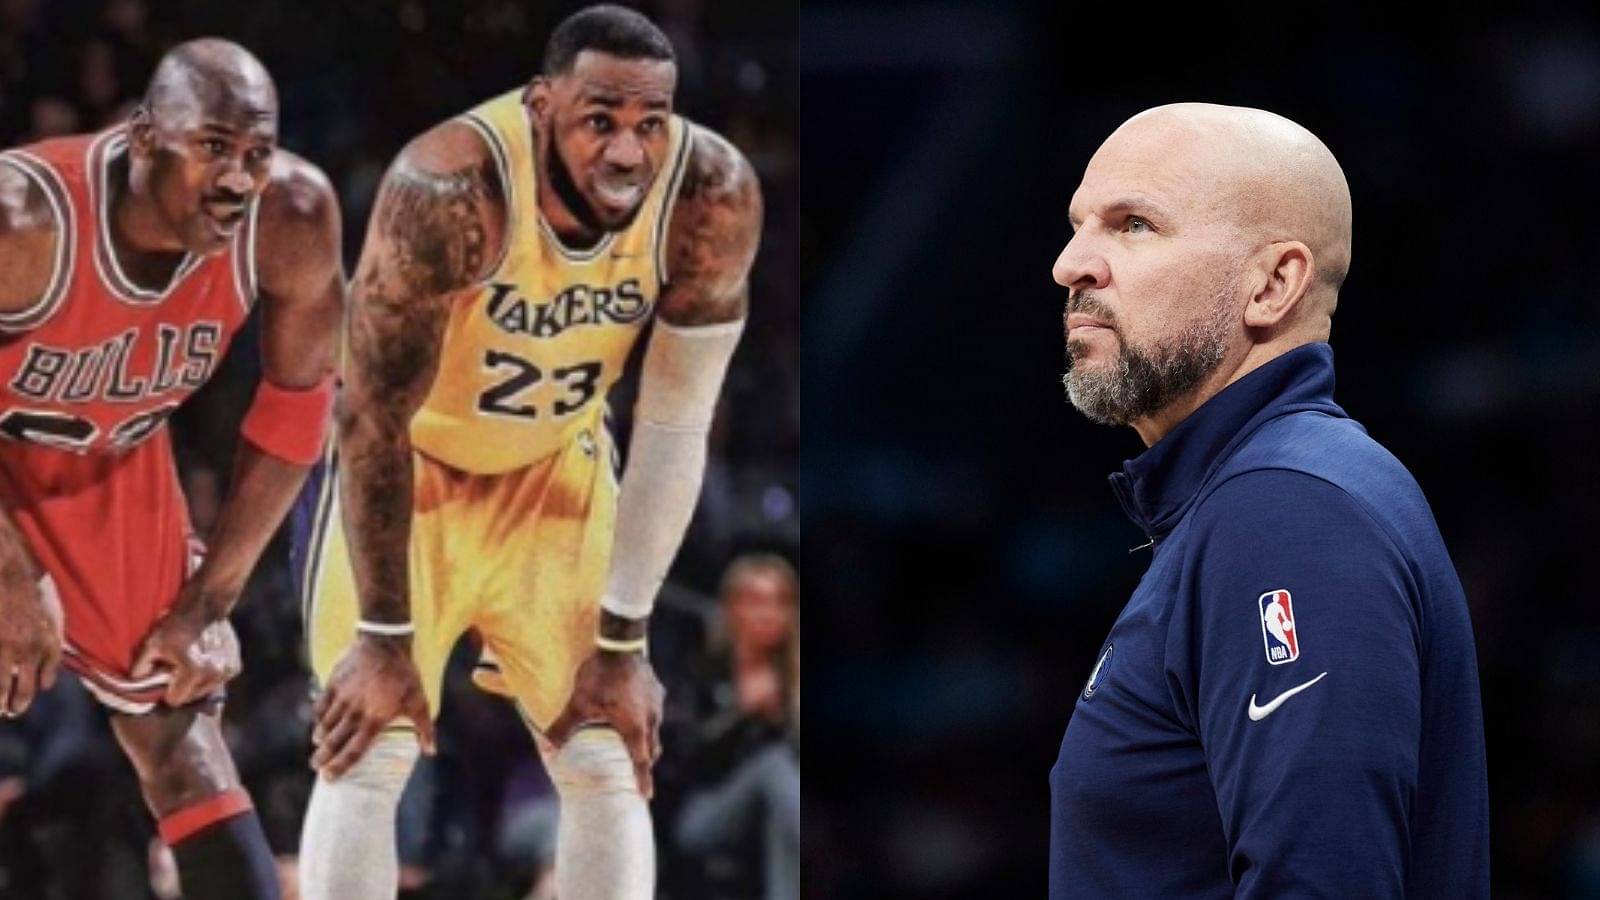 "LeBron James is going to go down as the GOAT": Jason Kidd chooses Lakers superstar over Michael Jordan, praises his complete skillset